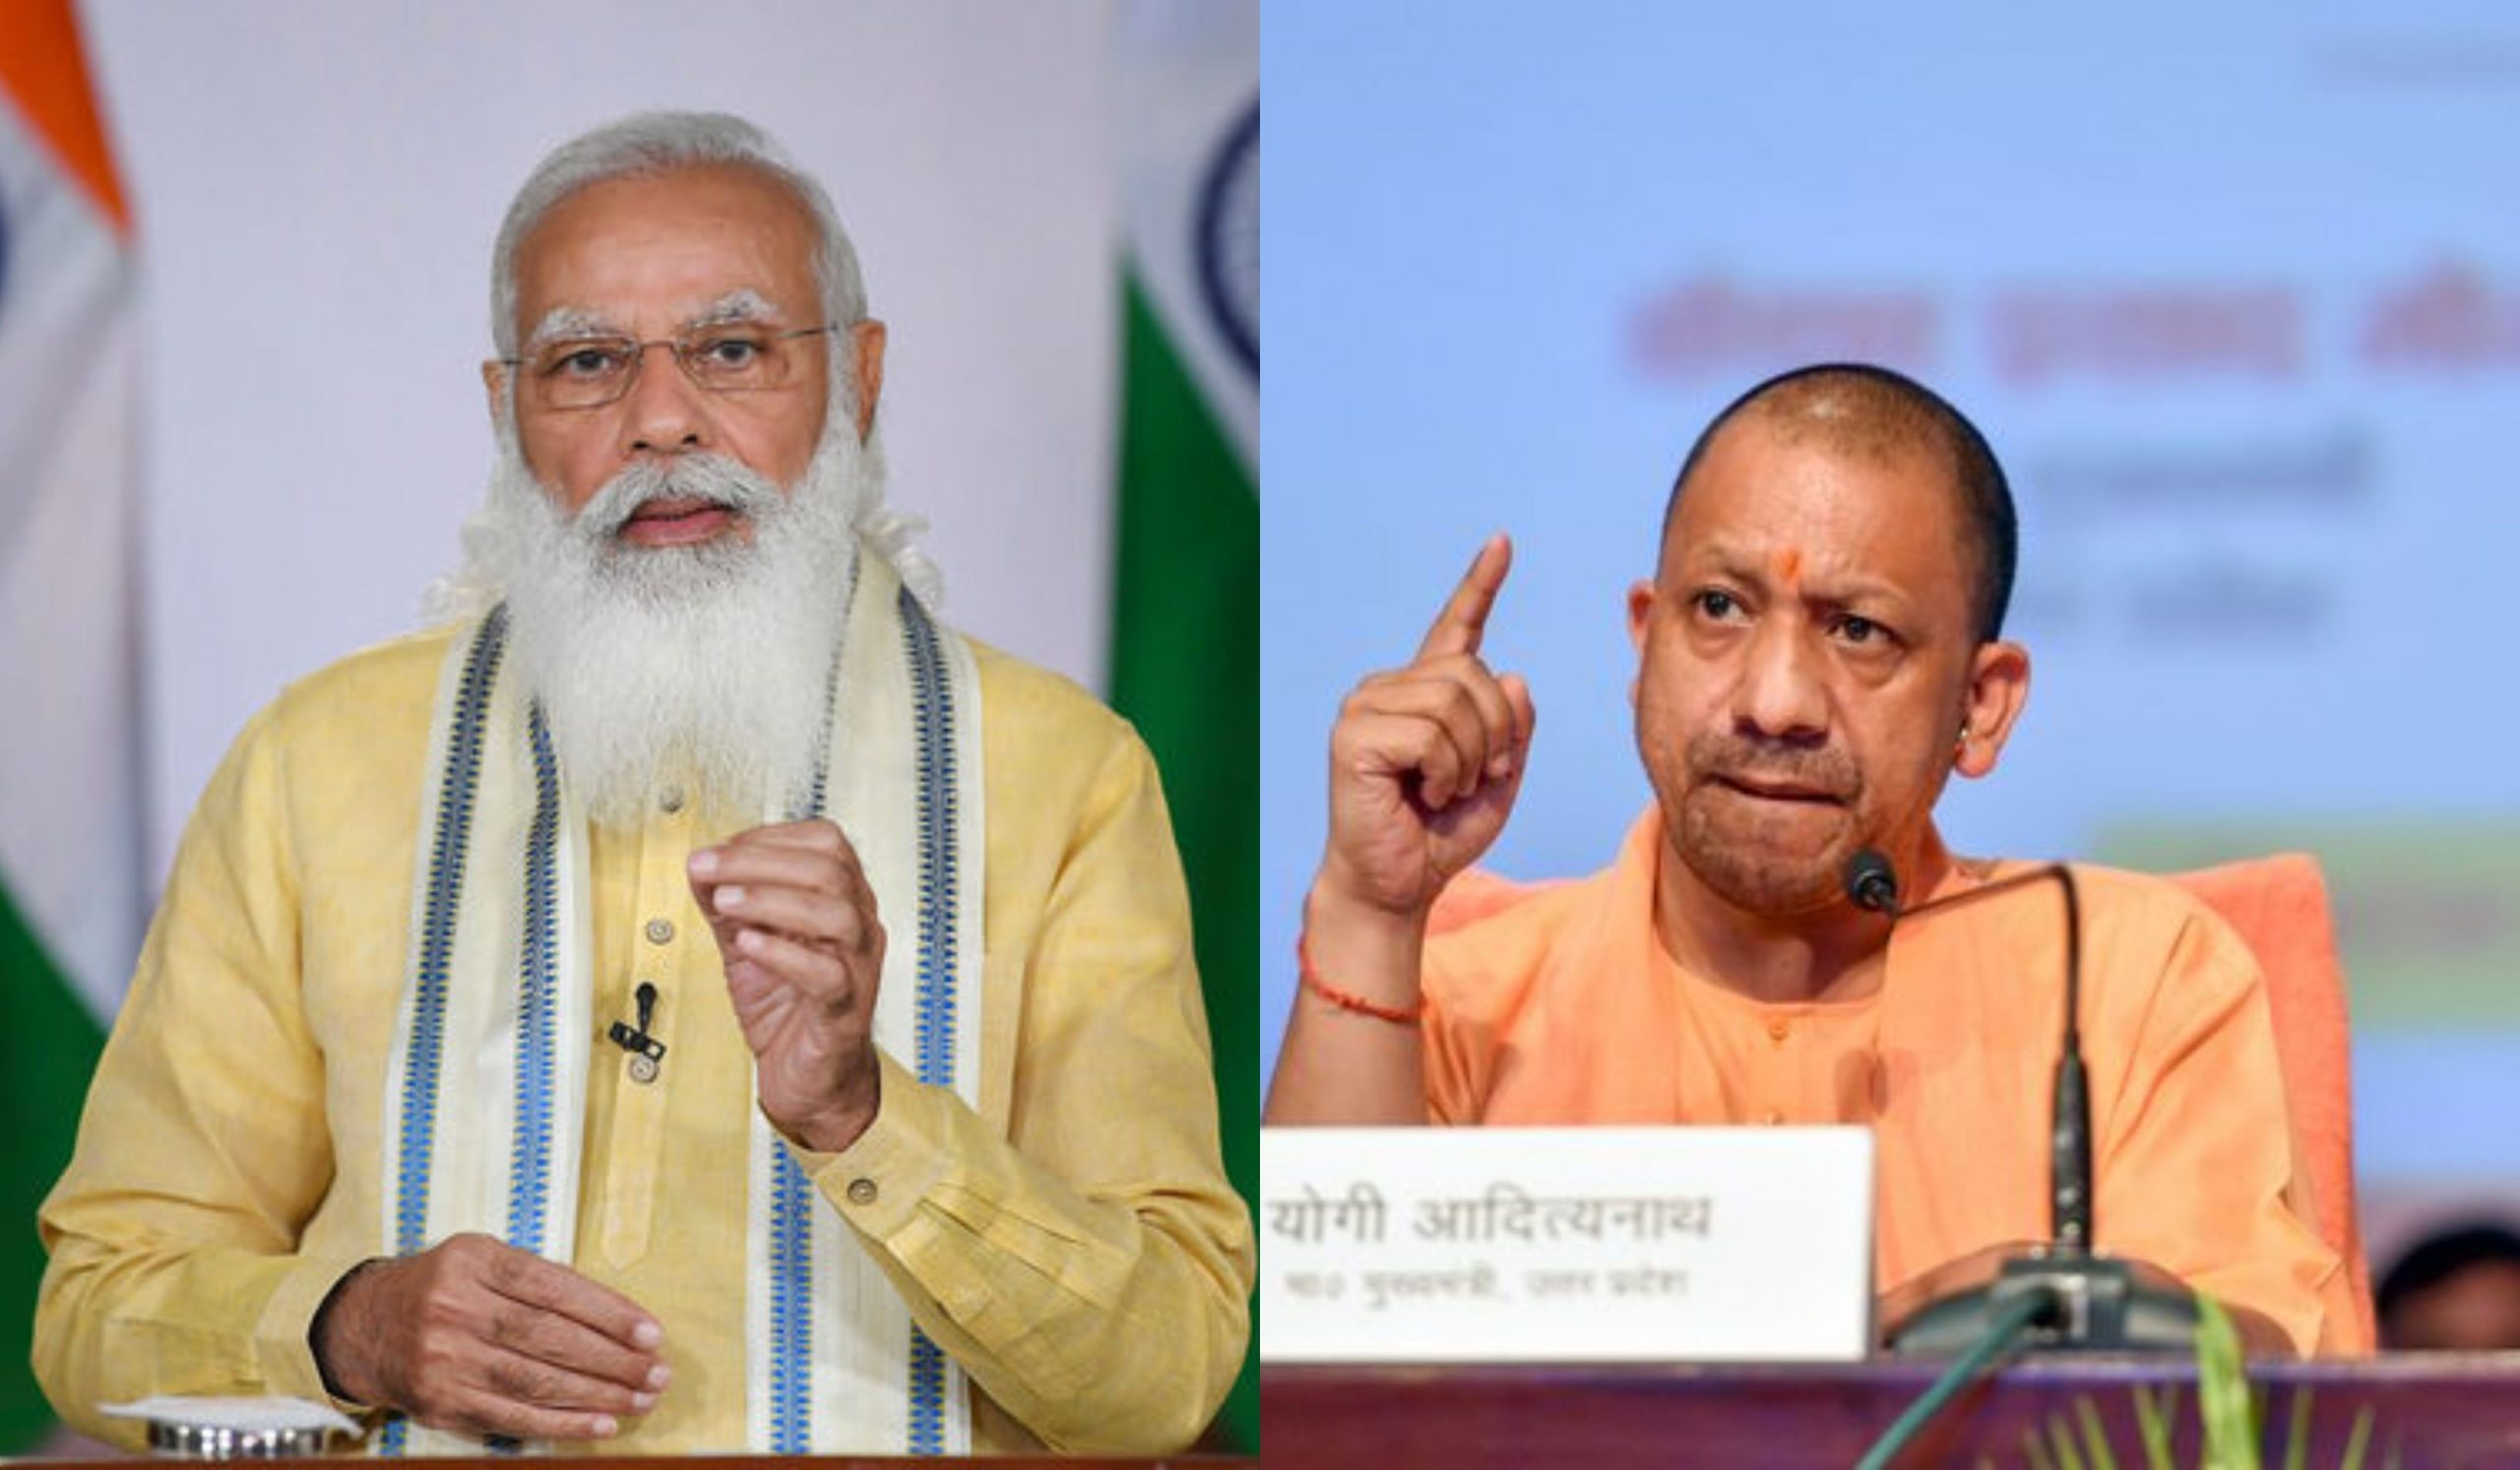 Yogi Adityanath to meet PM Modi, swearing-in ceremony likely after Holi